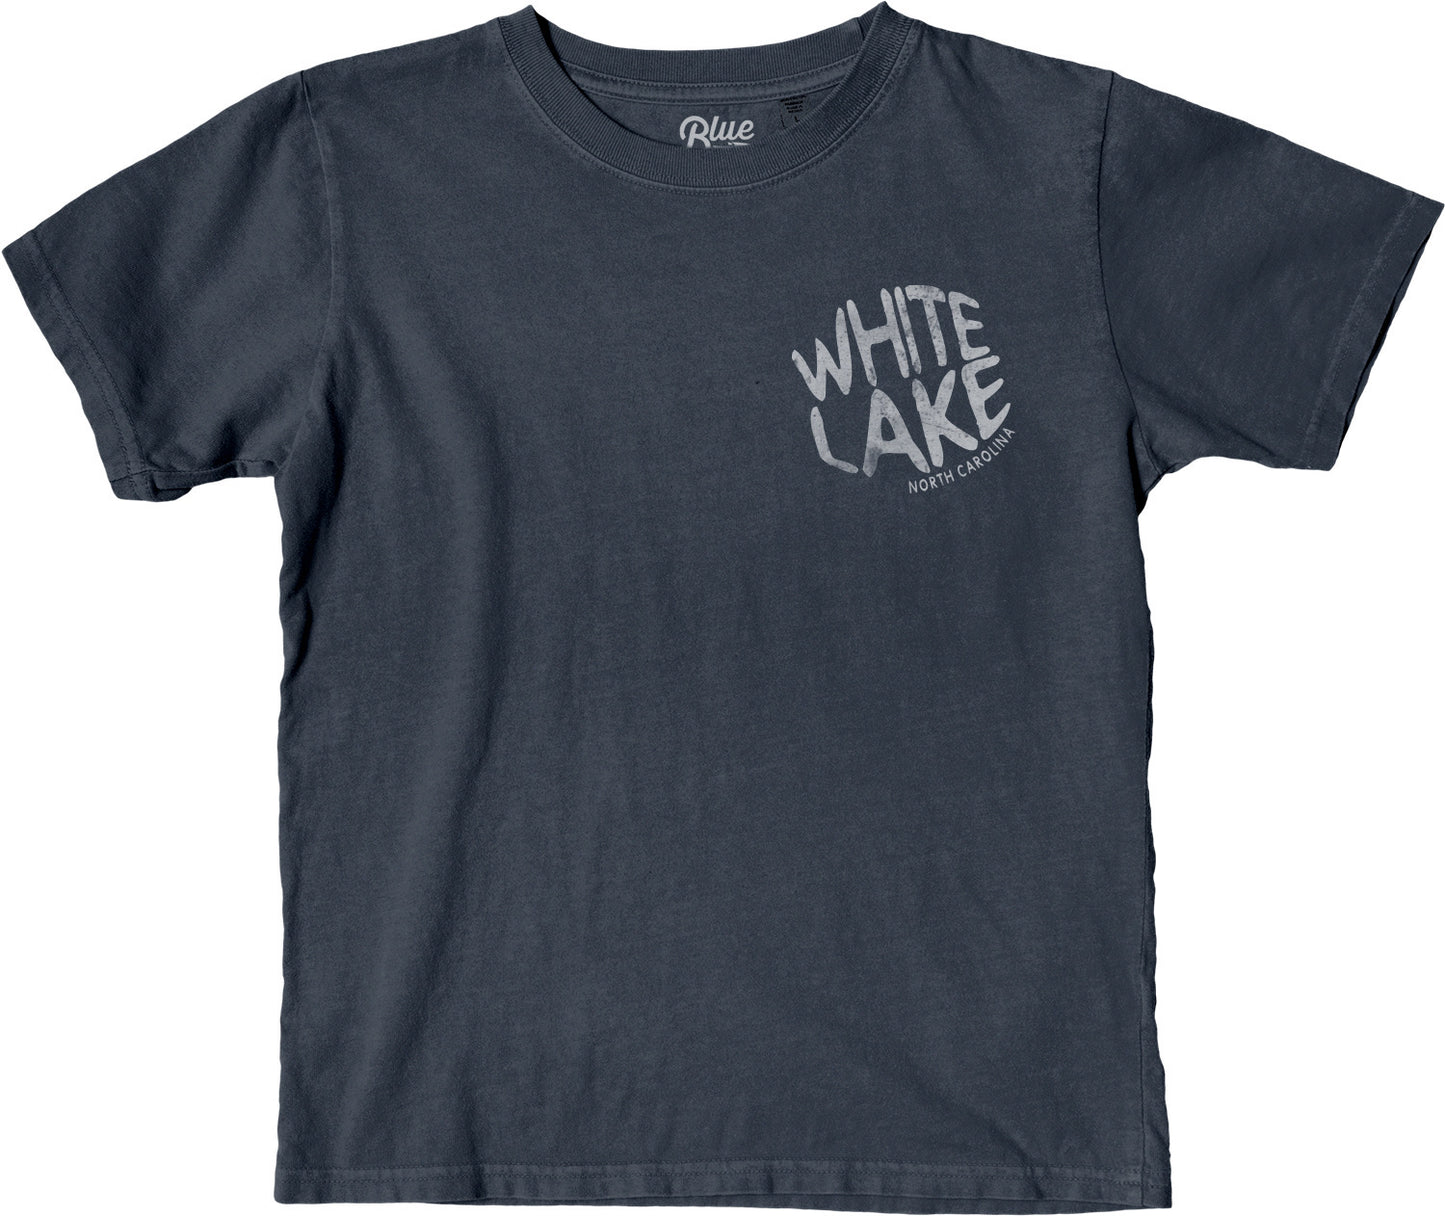 White Lake Tee Youth - Yoyo Indigo